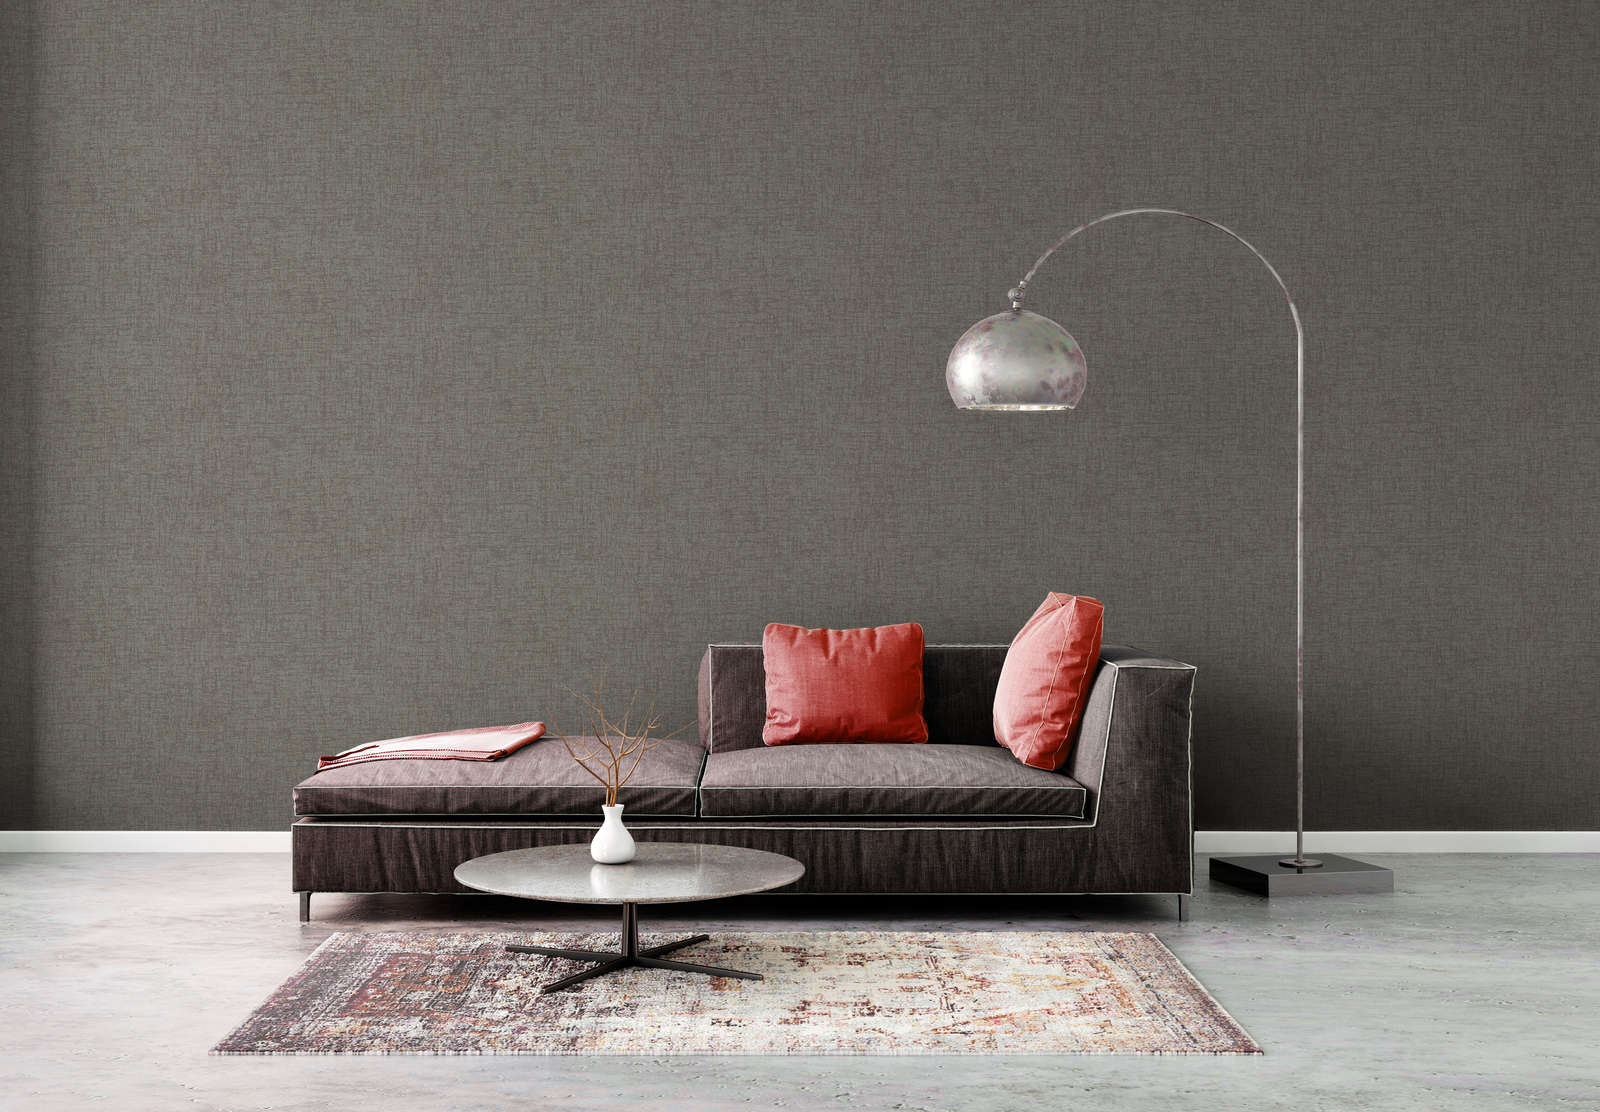             Non-woven wallpaper with texture in textile look - grey, dark grey
        